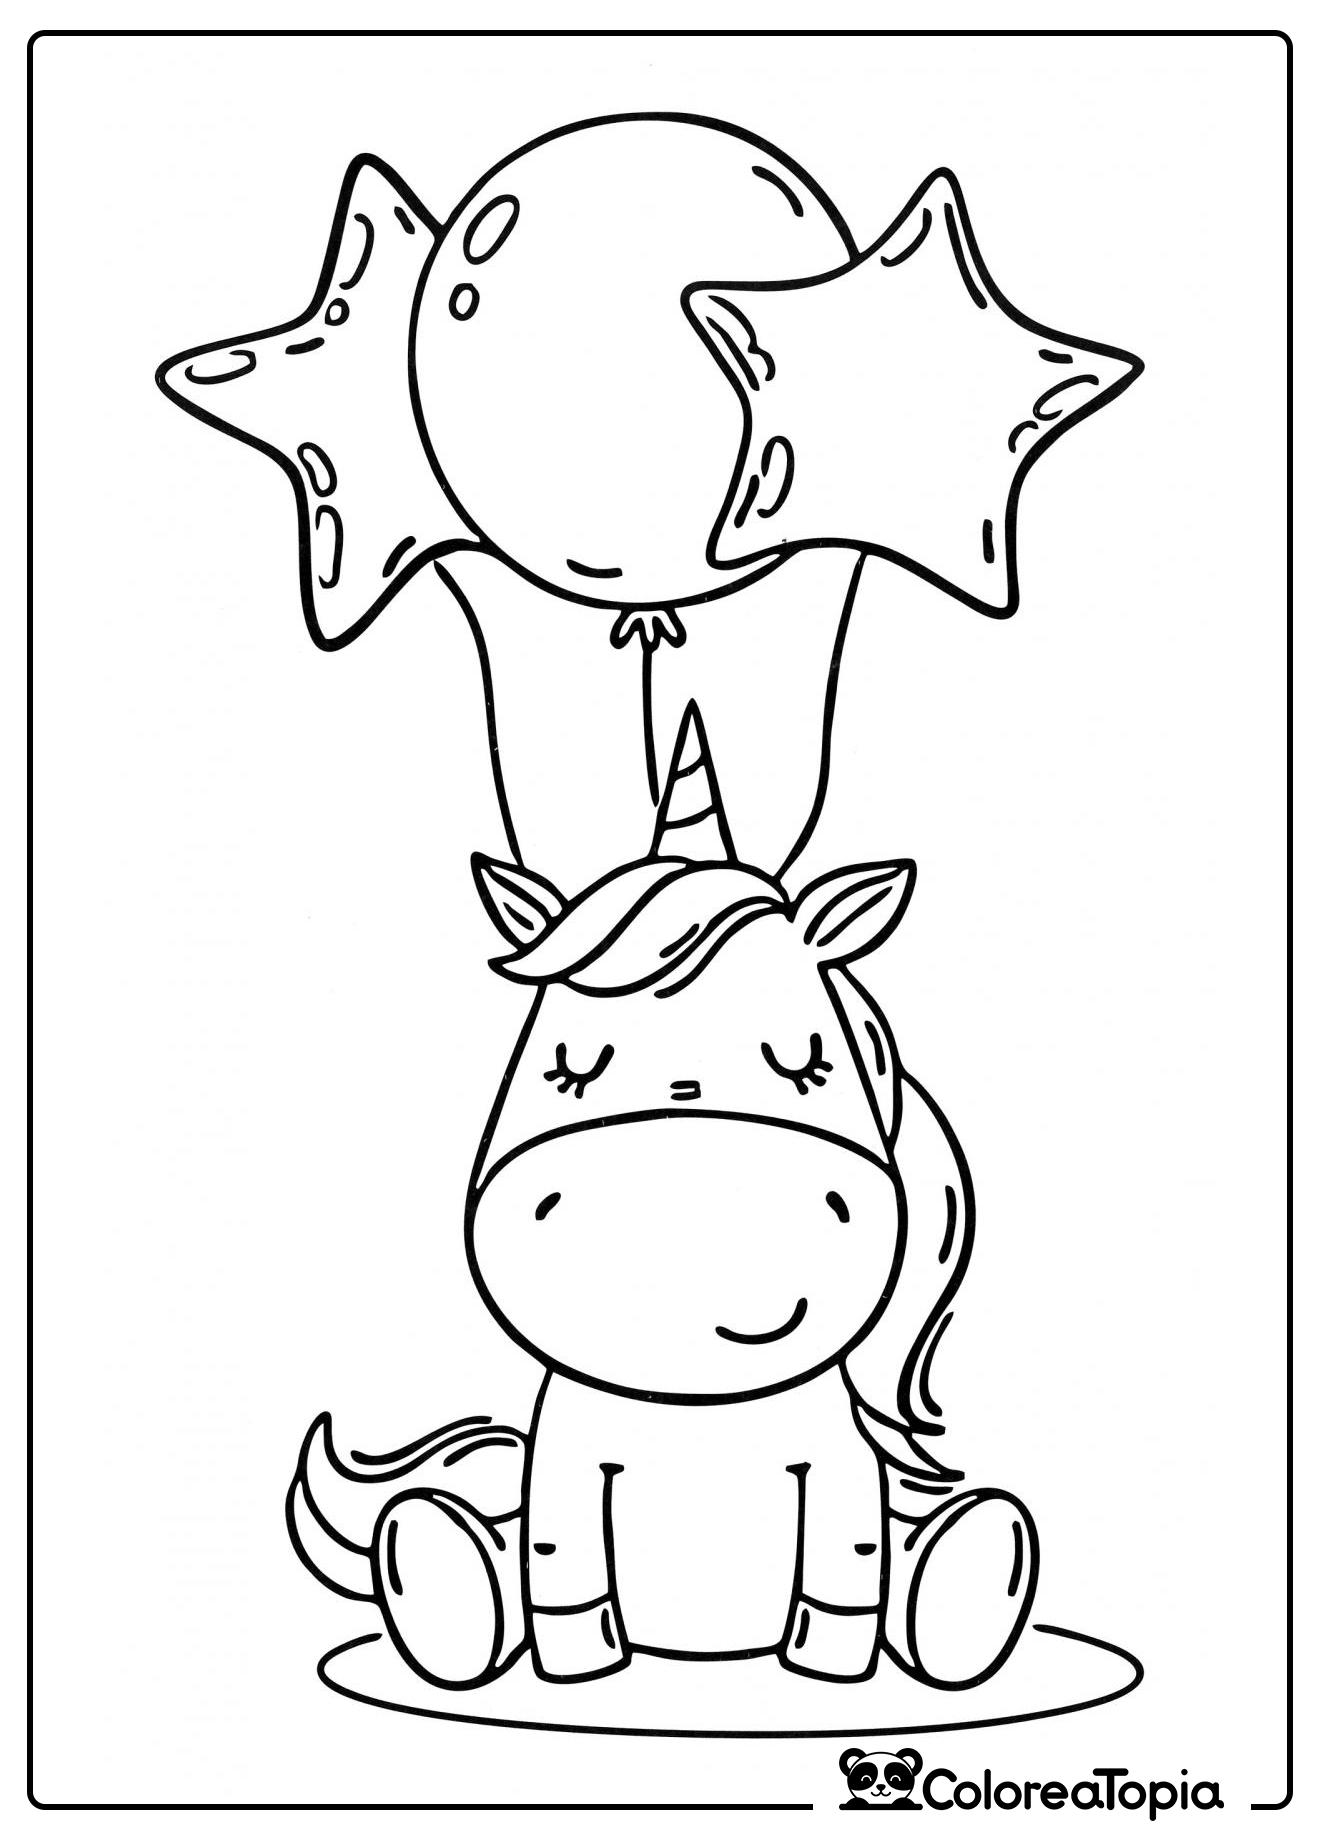 Unicornio con globos - dibujo para colorear